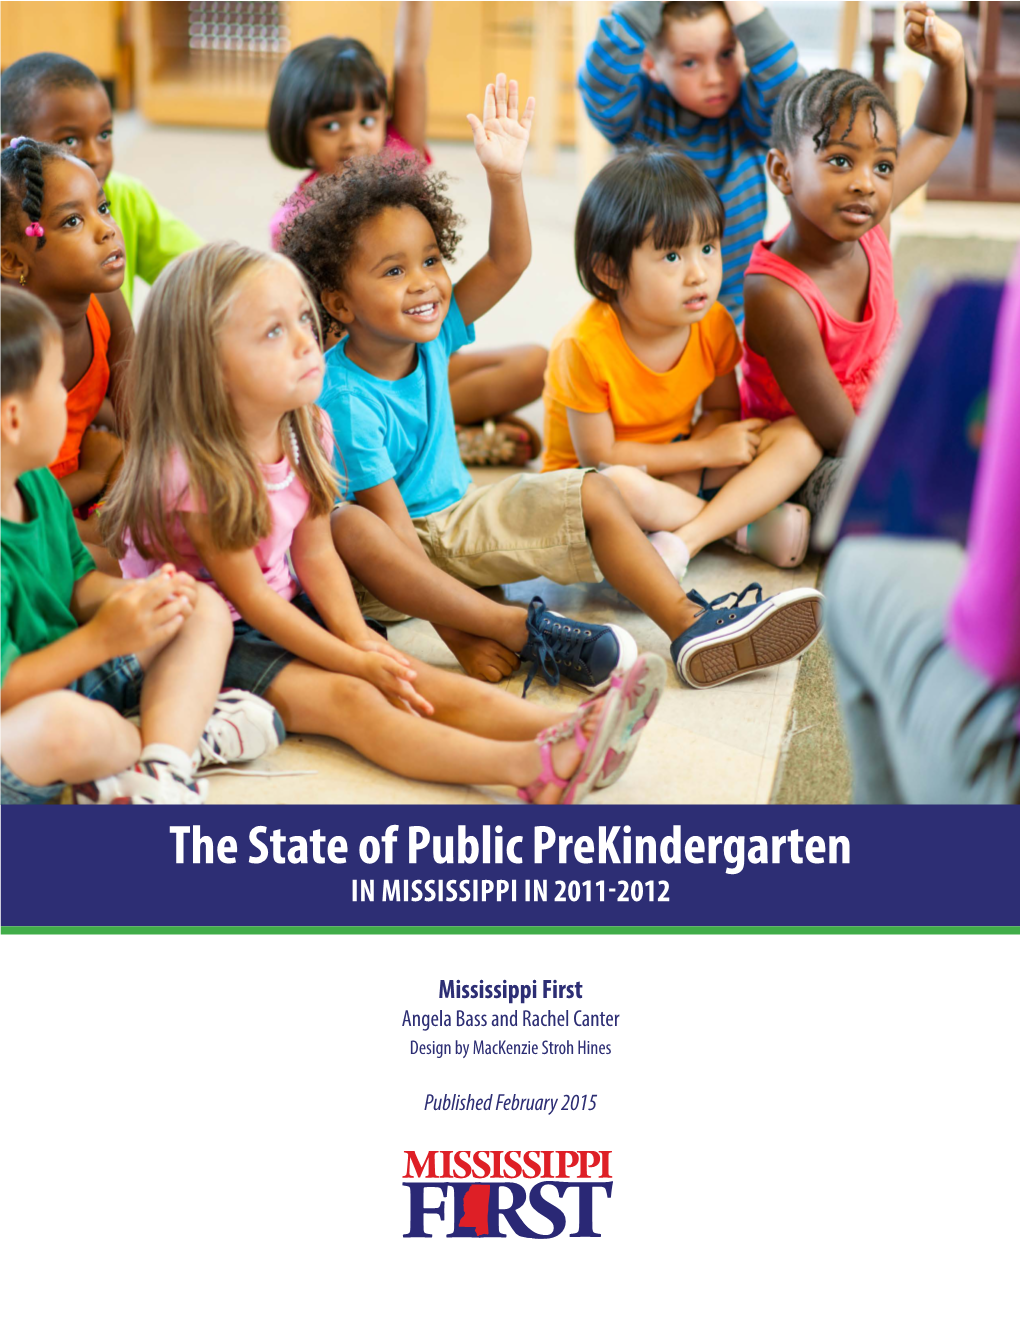 The State of Public Prekindergarten in MISSISSIPPI in 2011-2012